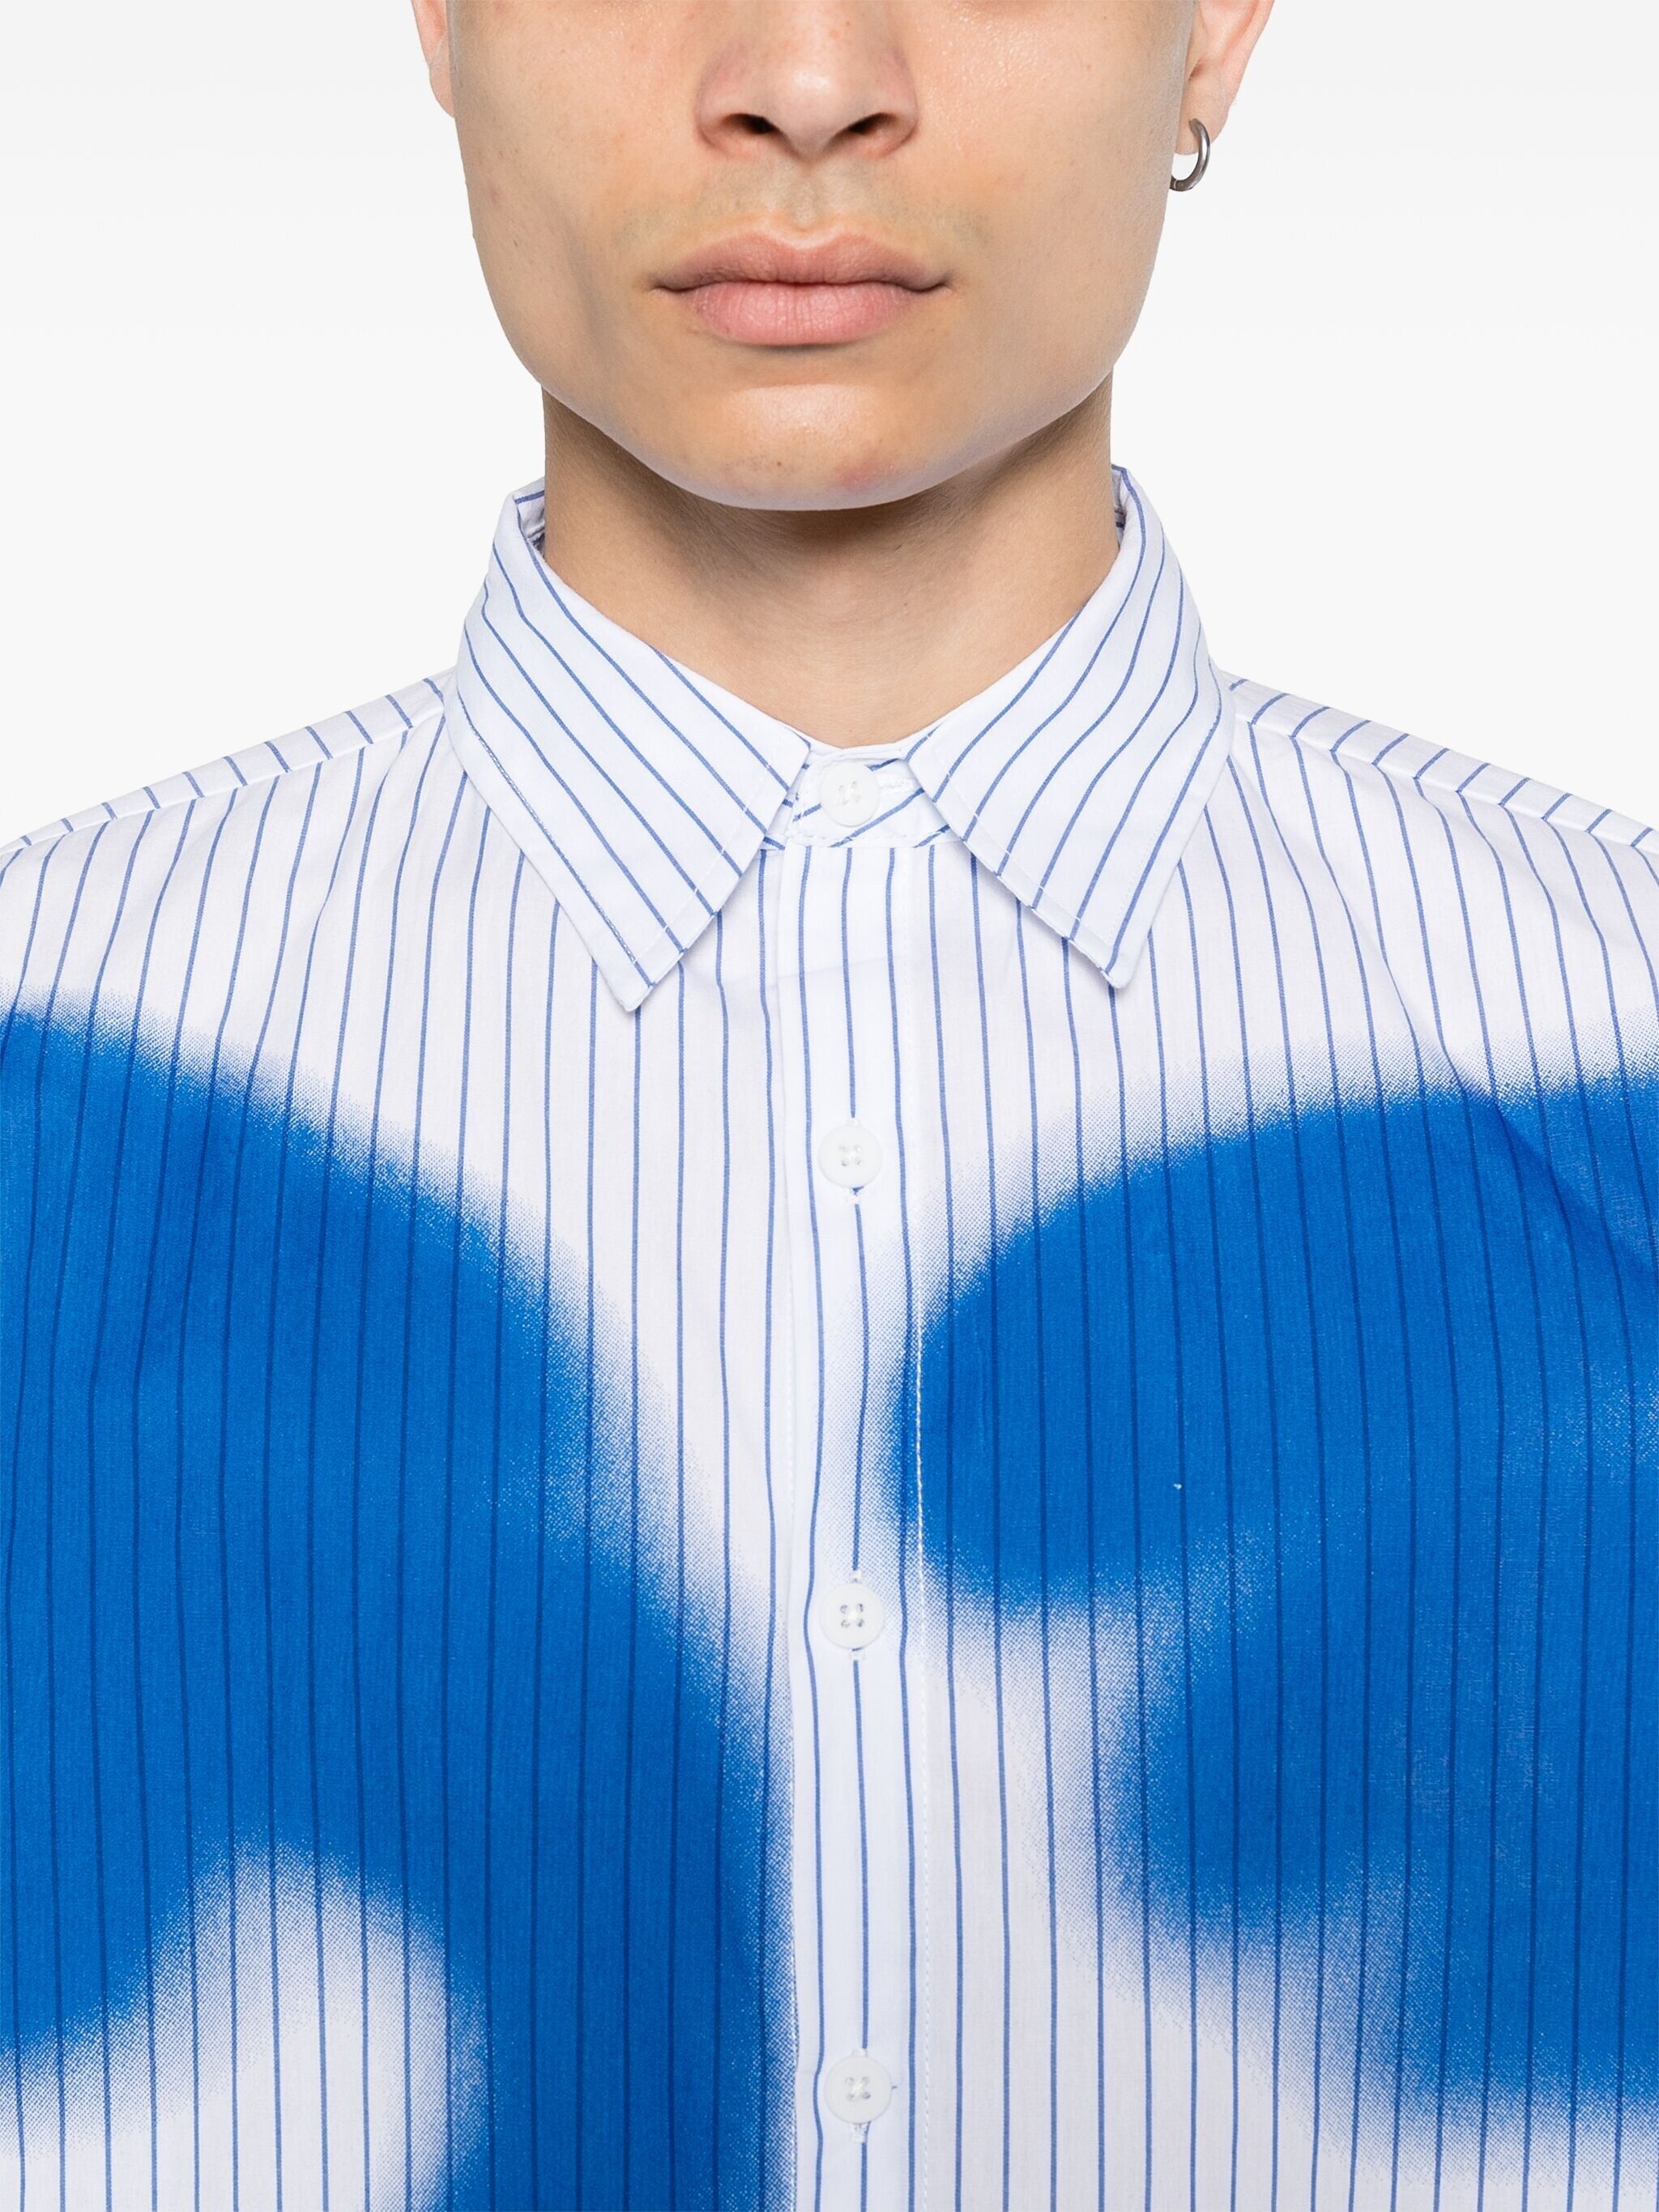 blurry-face striped shirt - 5